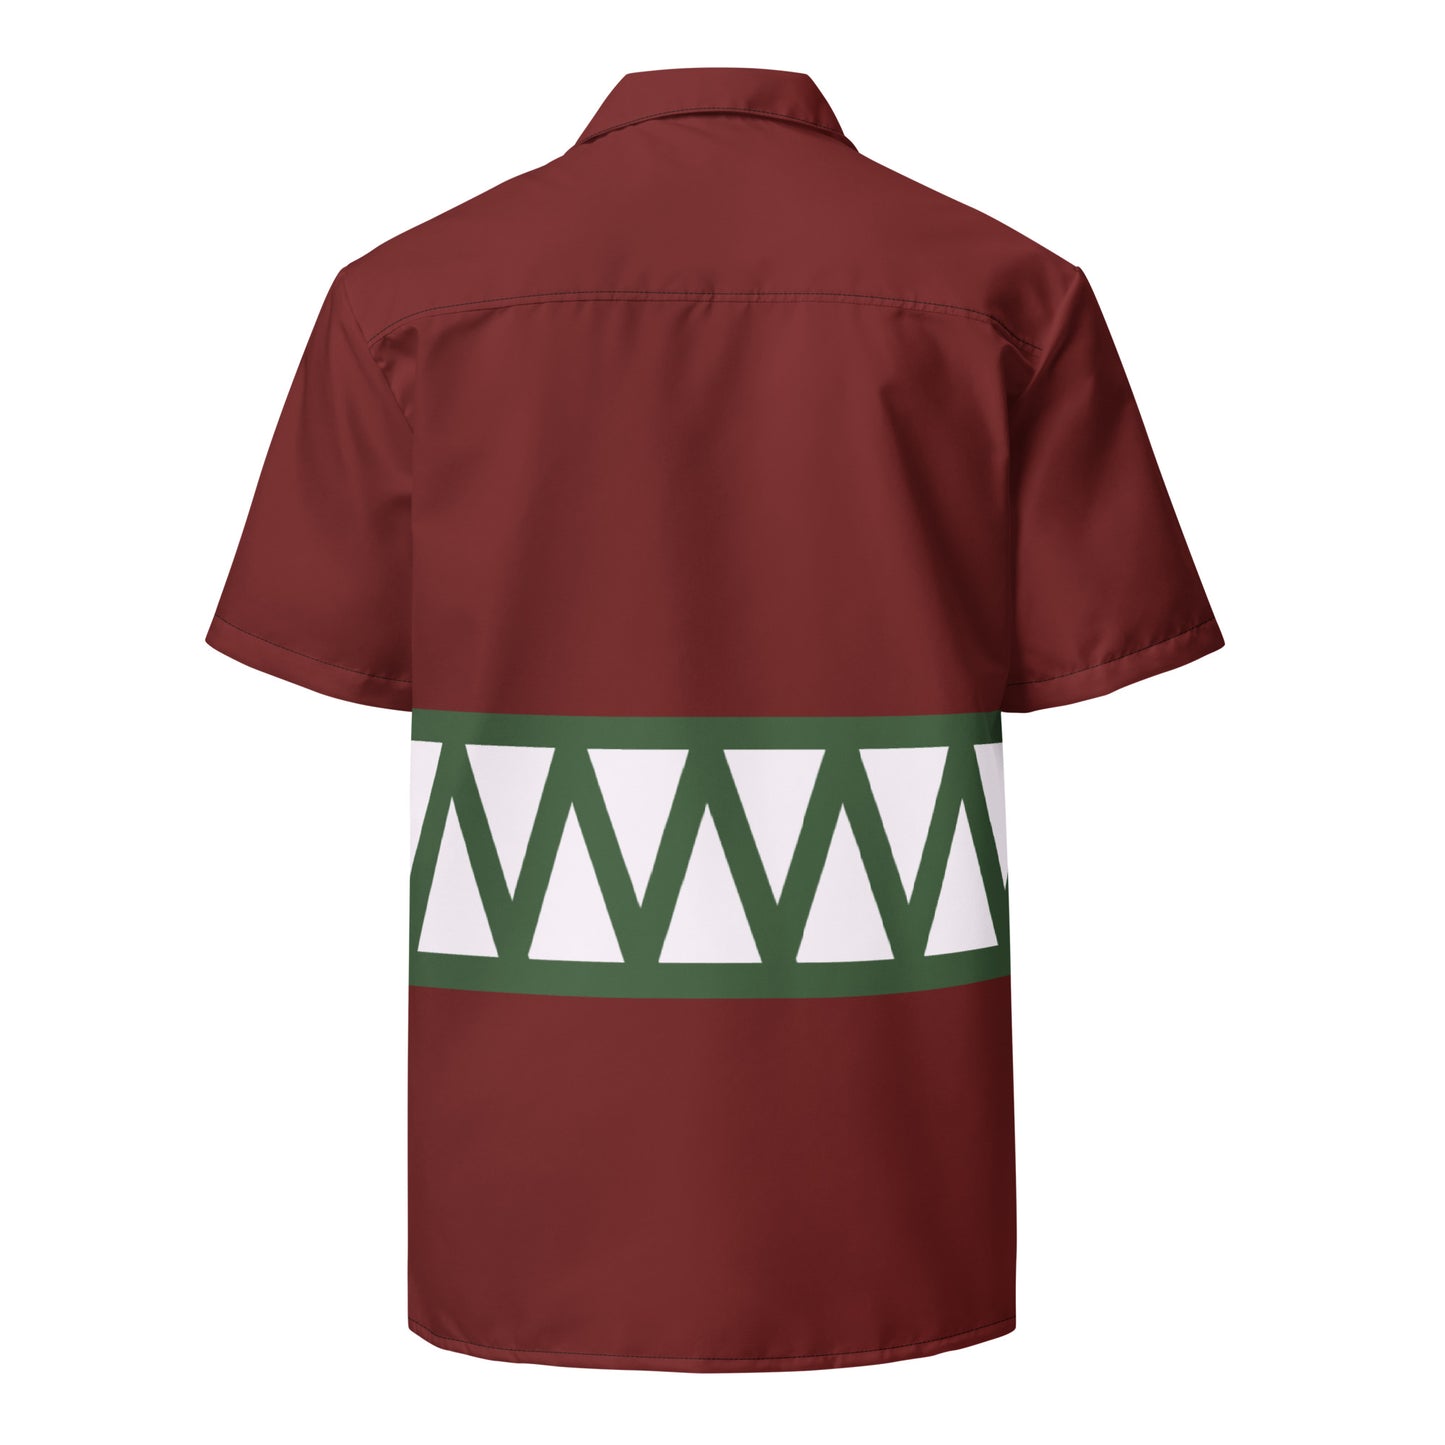 Liivya - Christmas Unisex button shirt